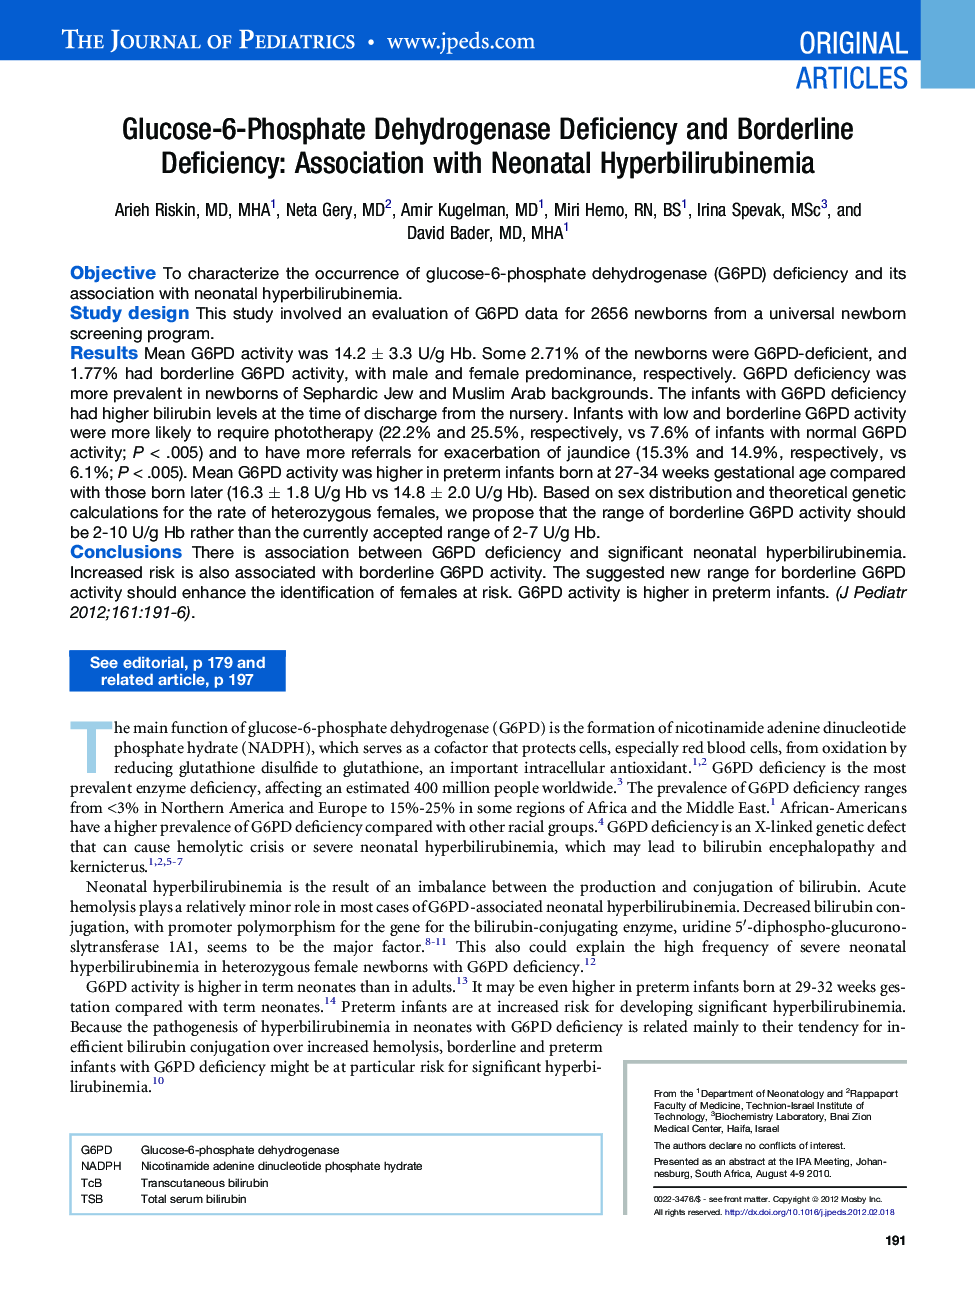 Glucose-6-Phosphate Dehydrogenase Deficiency and Borderline Deficiency: Association with Neonatal Hyperbilirubinemia